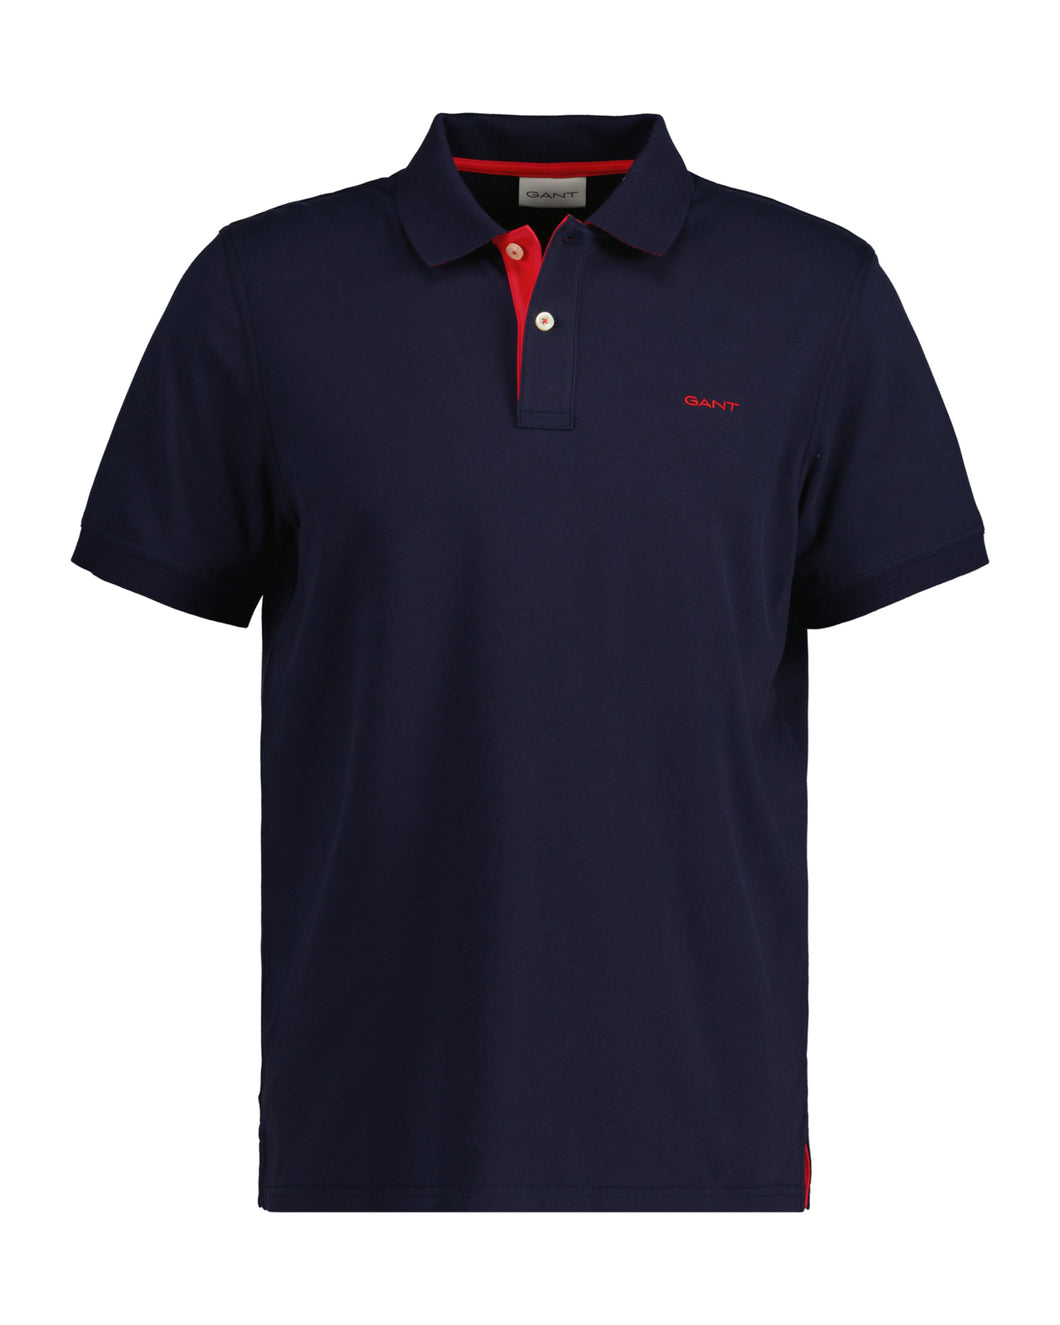 GANT Contrast Pique Polo Shirt 2062026